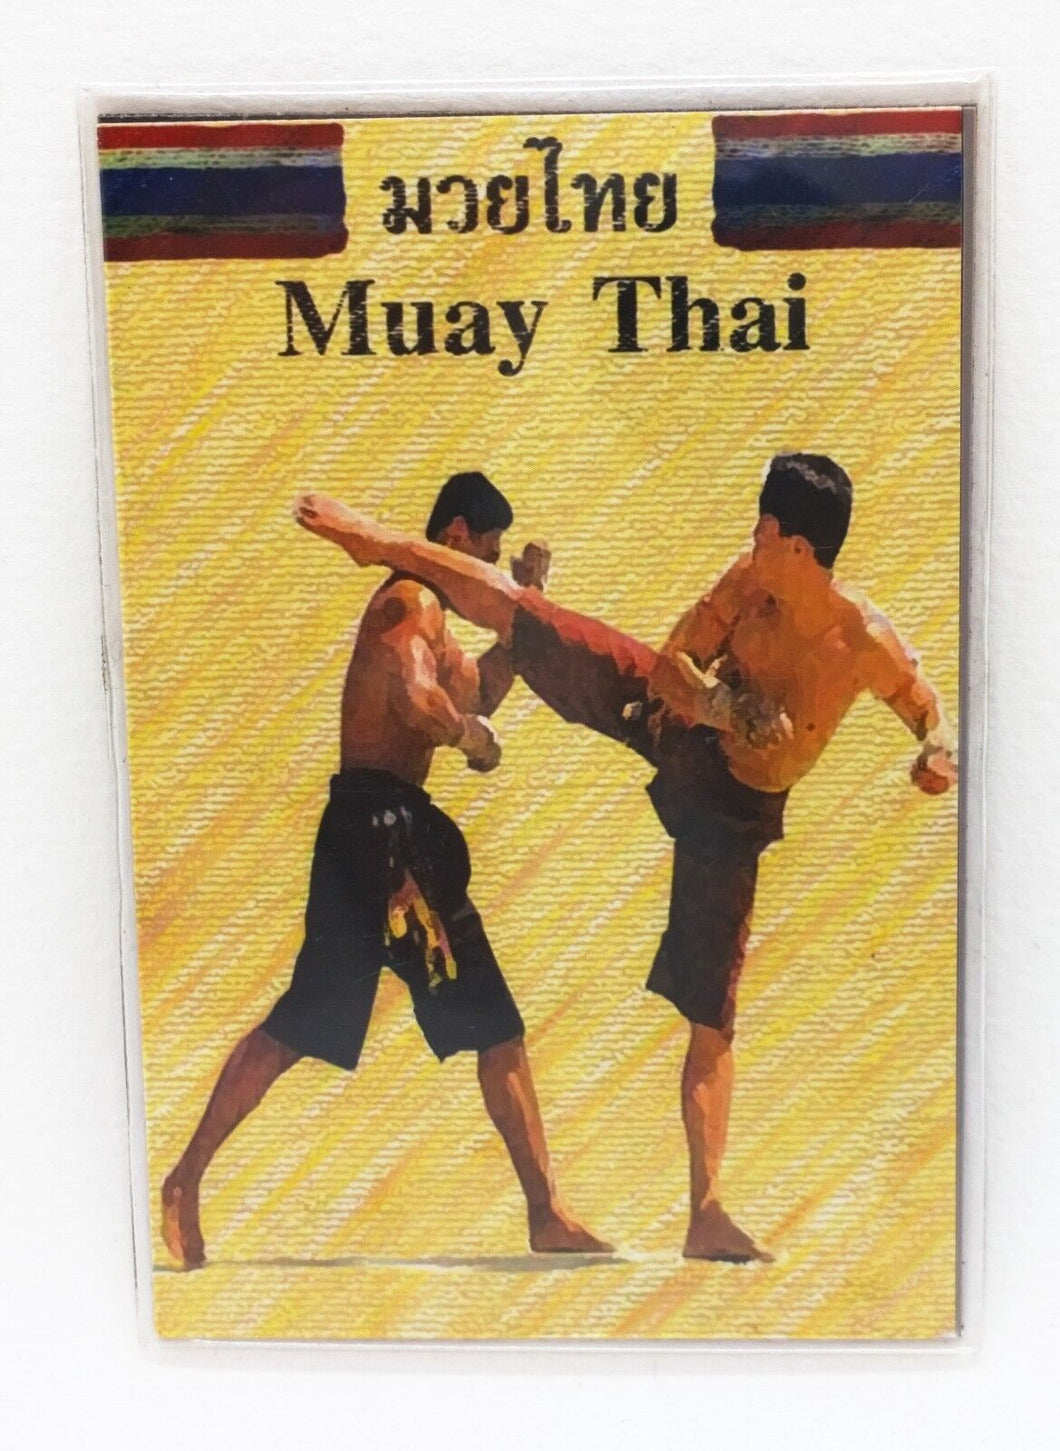 Magnet Muay Thai Boxing Poster Martial arts pic Fridge Collectible Decor 2